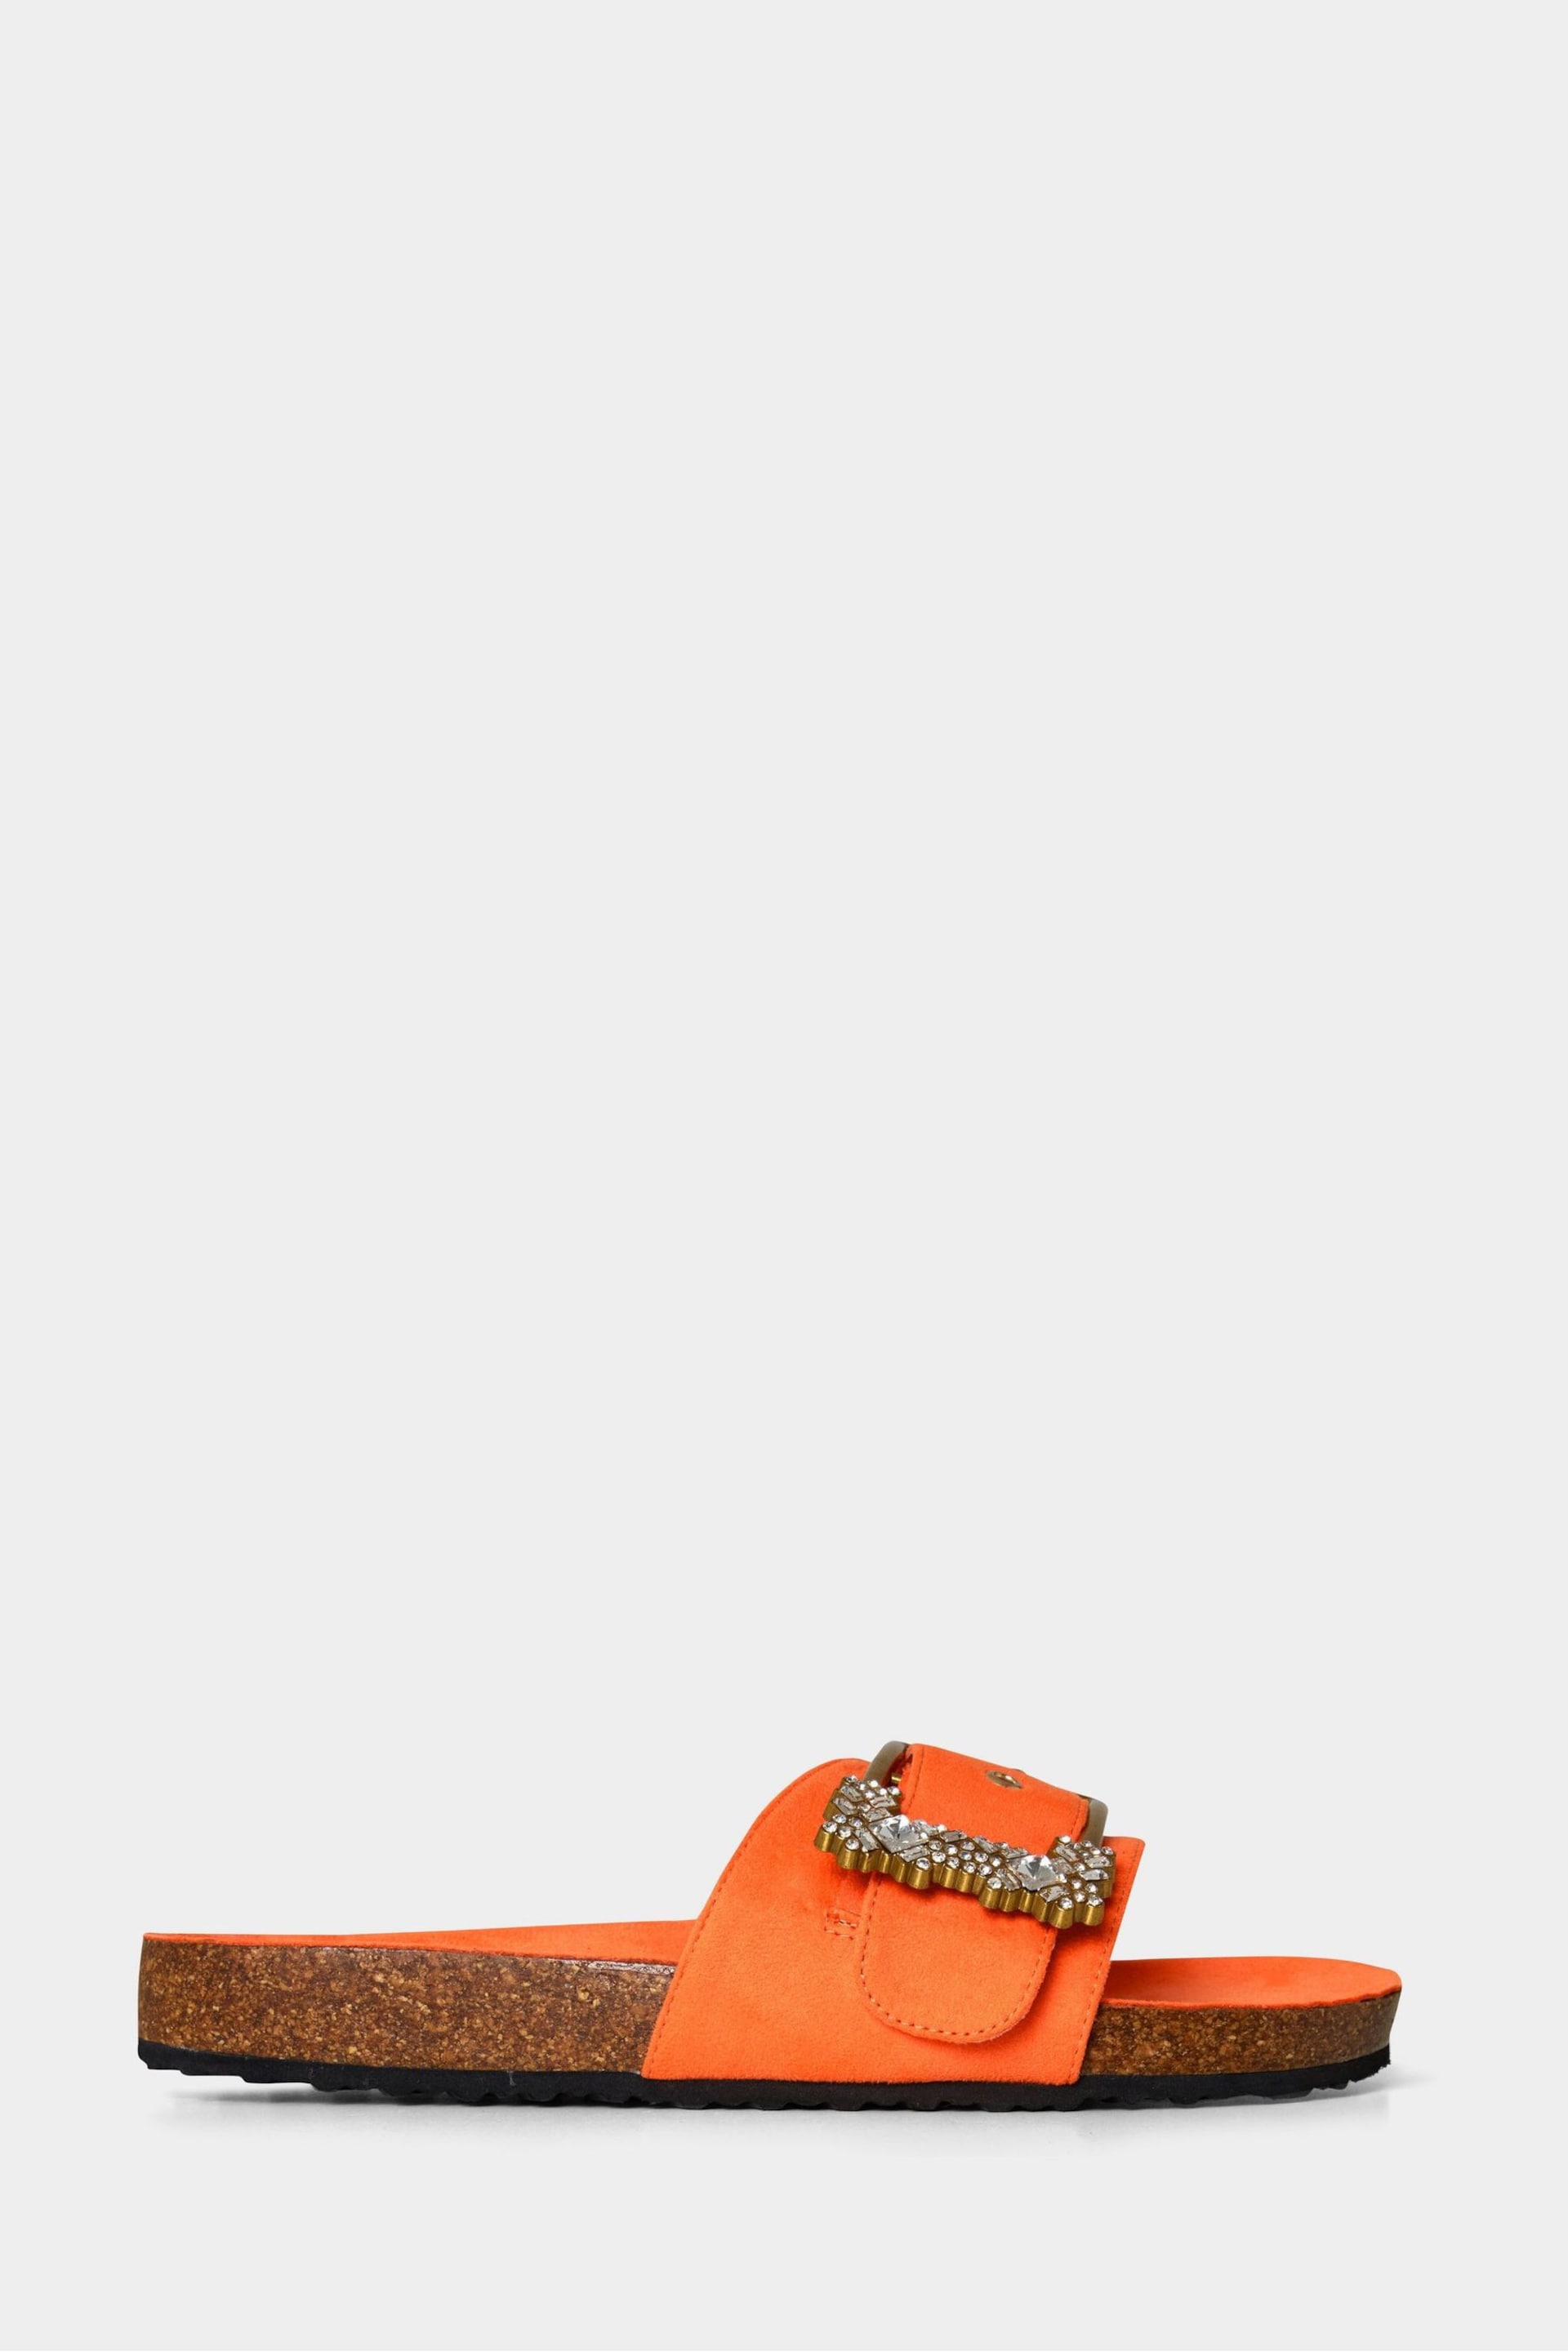 Joe Browns Orange Crystal Buckle Slider Sandals - Image 1 of 4